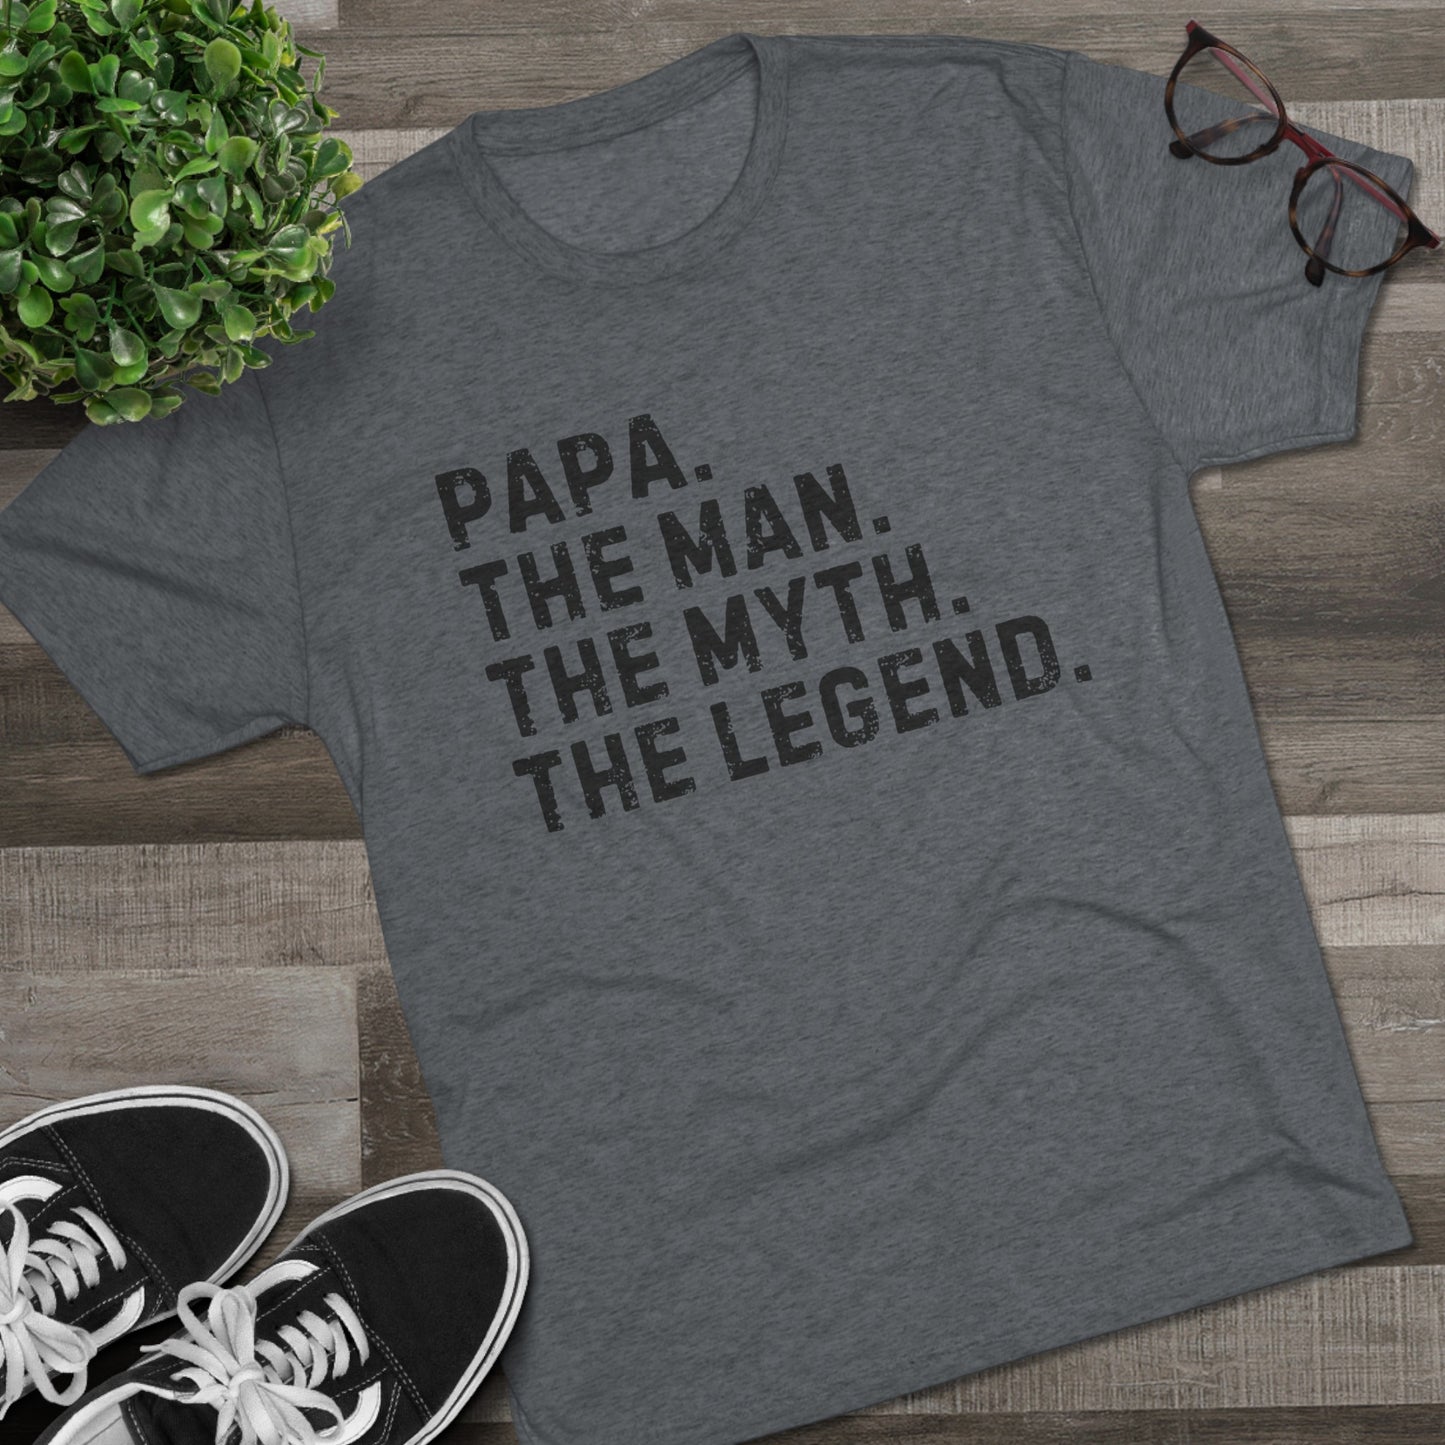 Papa - The Man. The Myth. The Legend. T-Shirt - Ultra-Soft Tri-Blend, Regular Fit